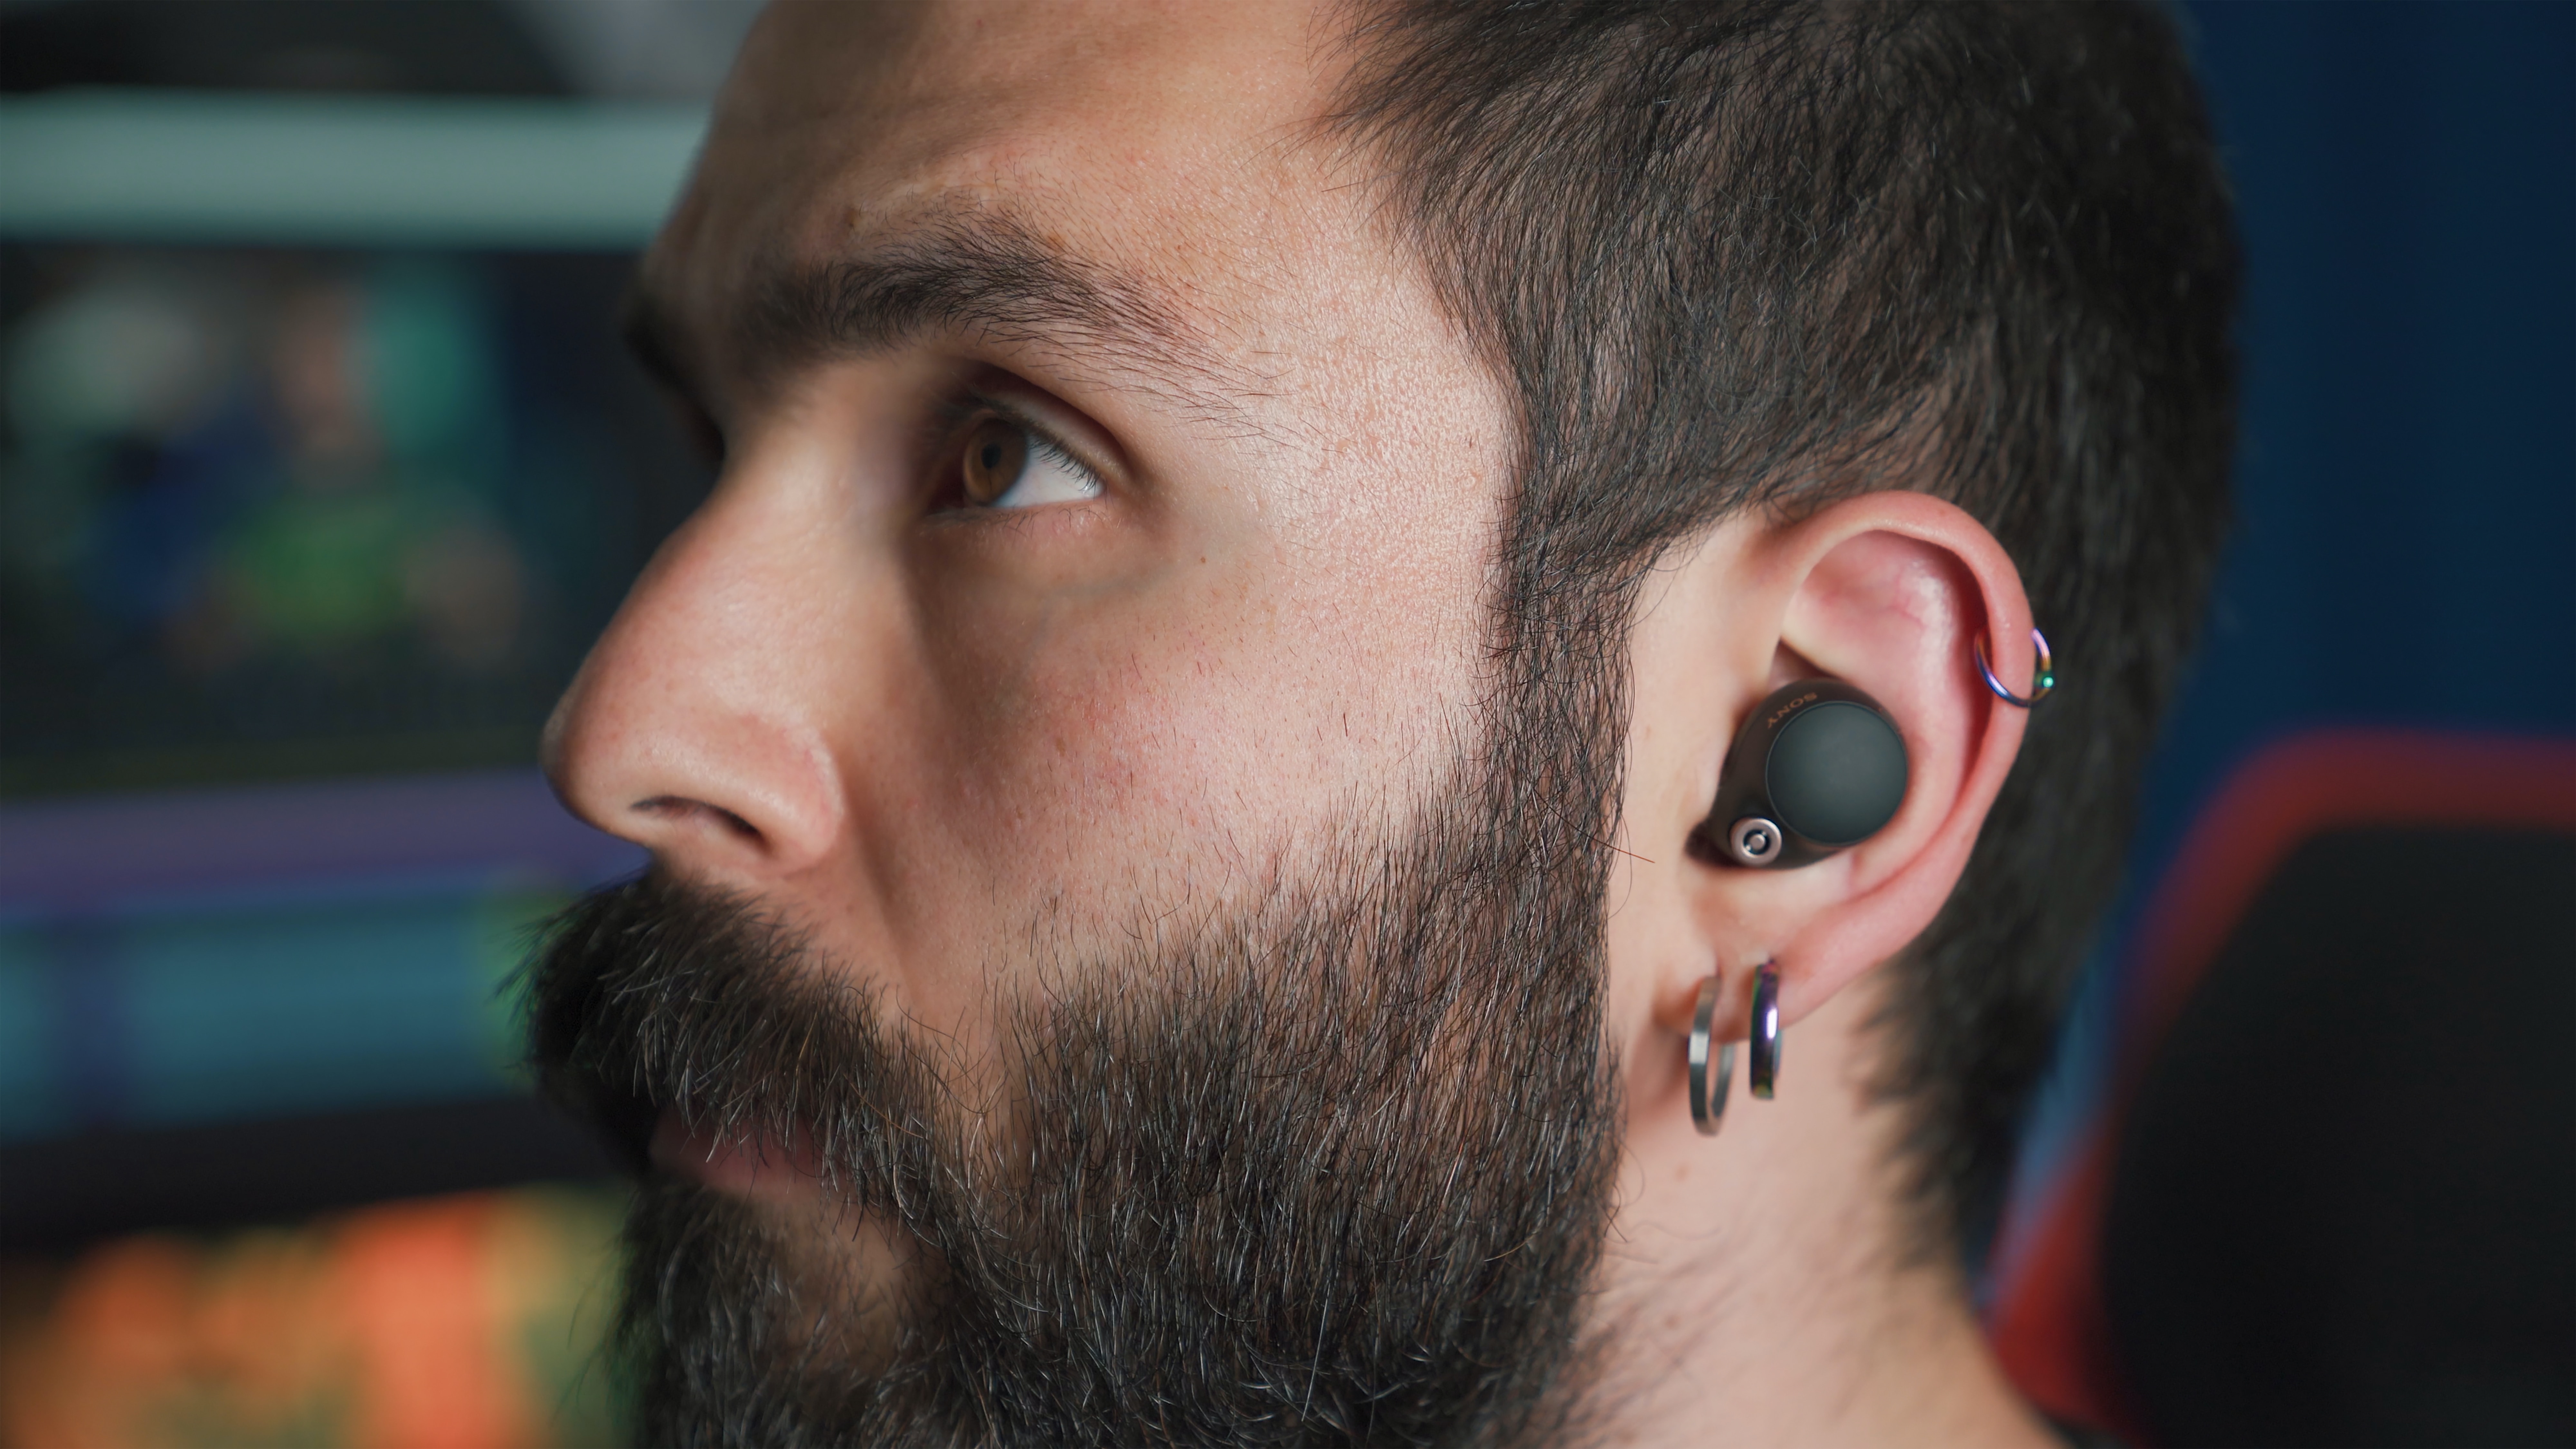 how-to-wear-wireless-earbuds-properly